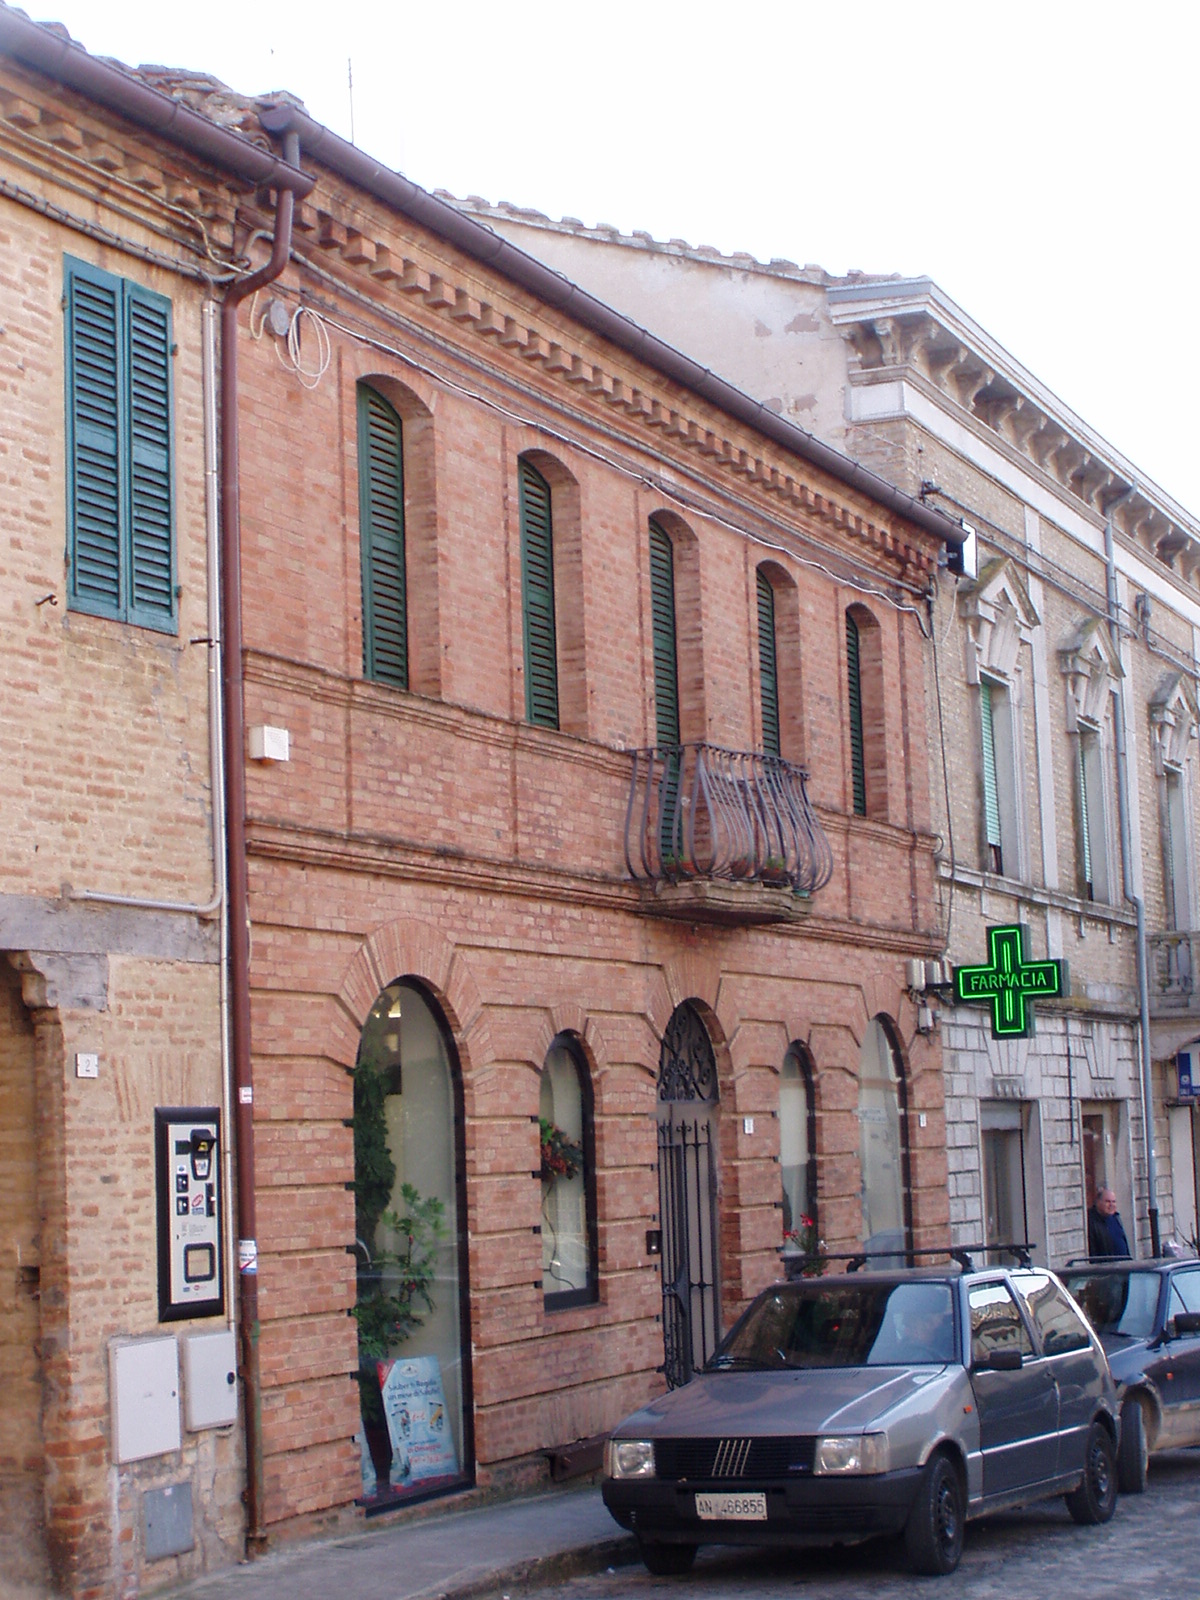 Palazzo d"abitazioni (palazzo, d'abitazioni) - Santa Maria Nuova (AN) 